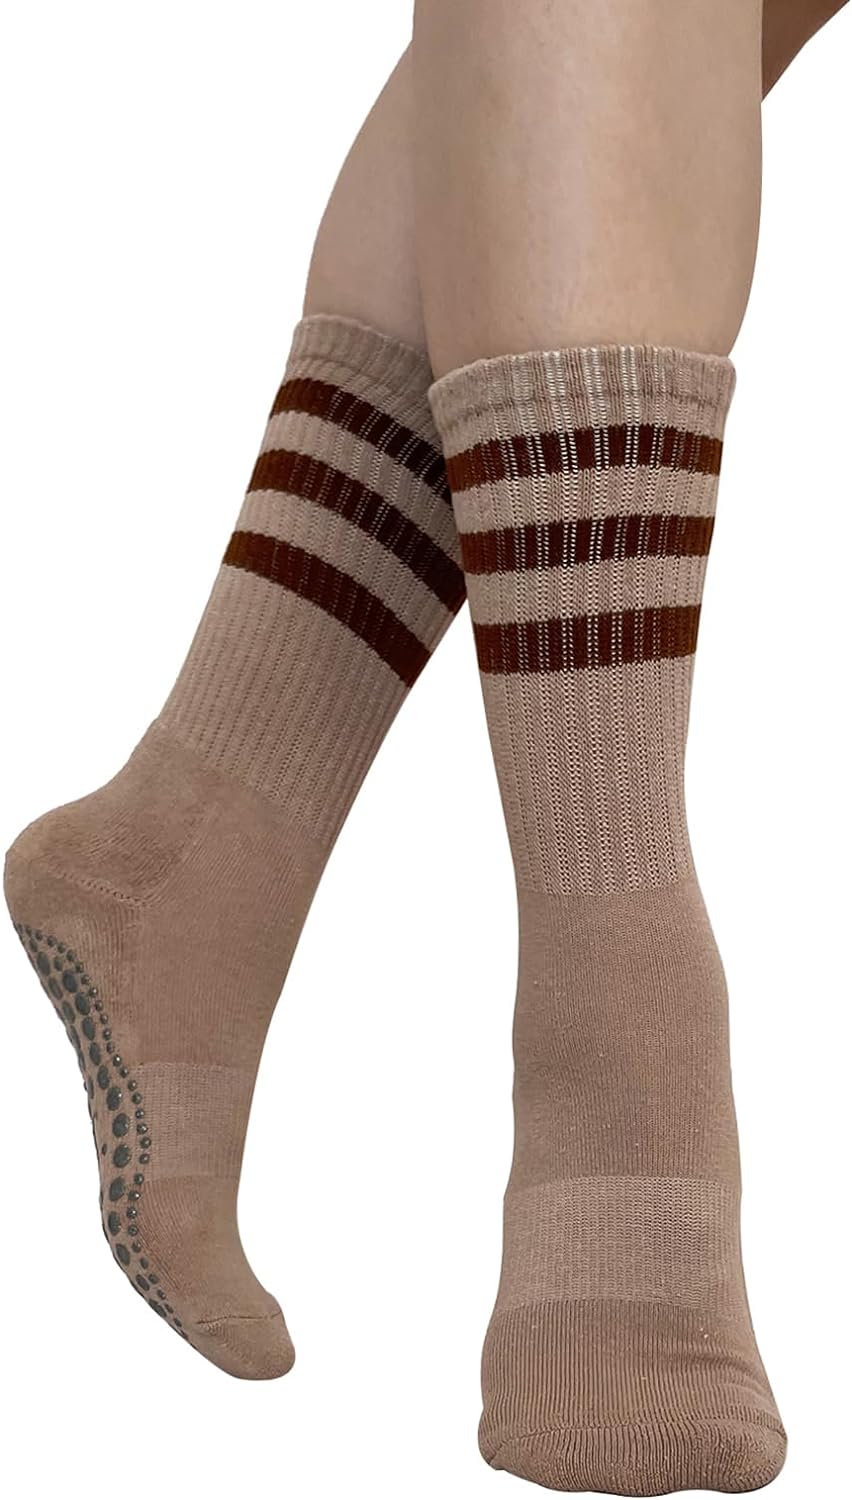 JCZANXI Yoga Socks with Grips for Women, Fashion Non Slip Grippy